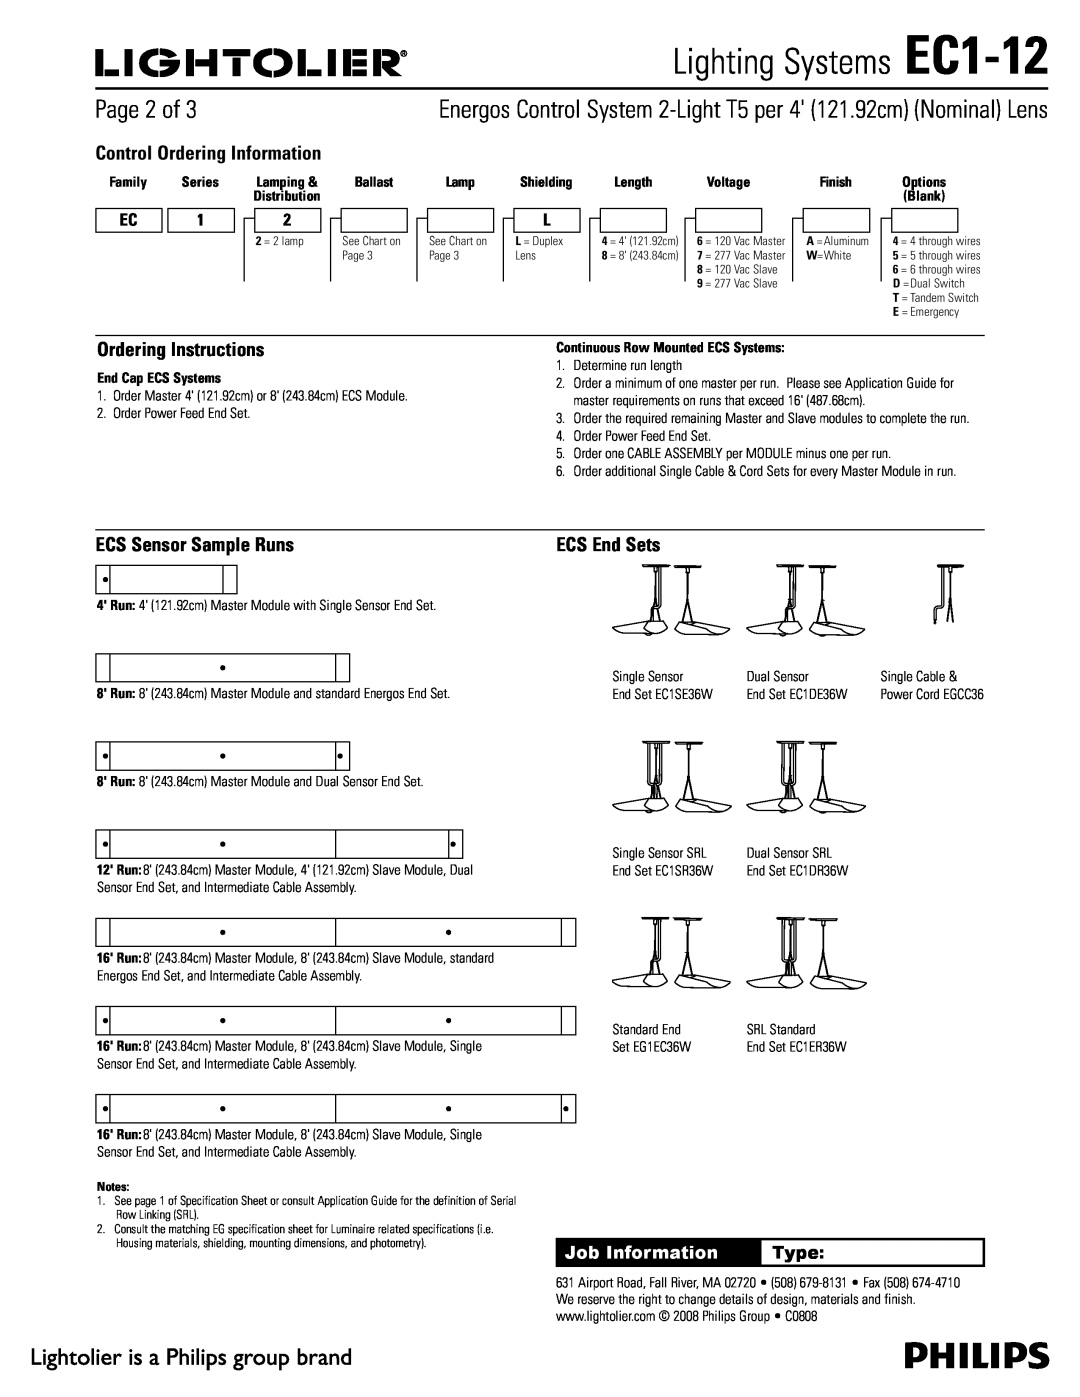 Lightolier EC1-12 Page 2 of, Control Ordering Information, Ordering Instructions, ECS Sensor Sample Runs, Type 